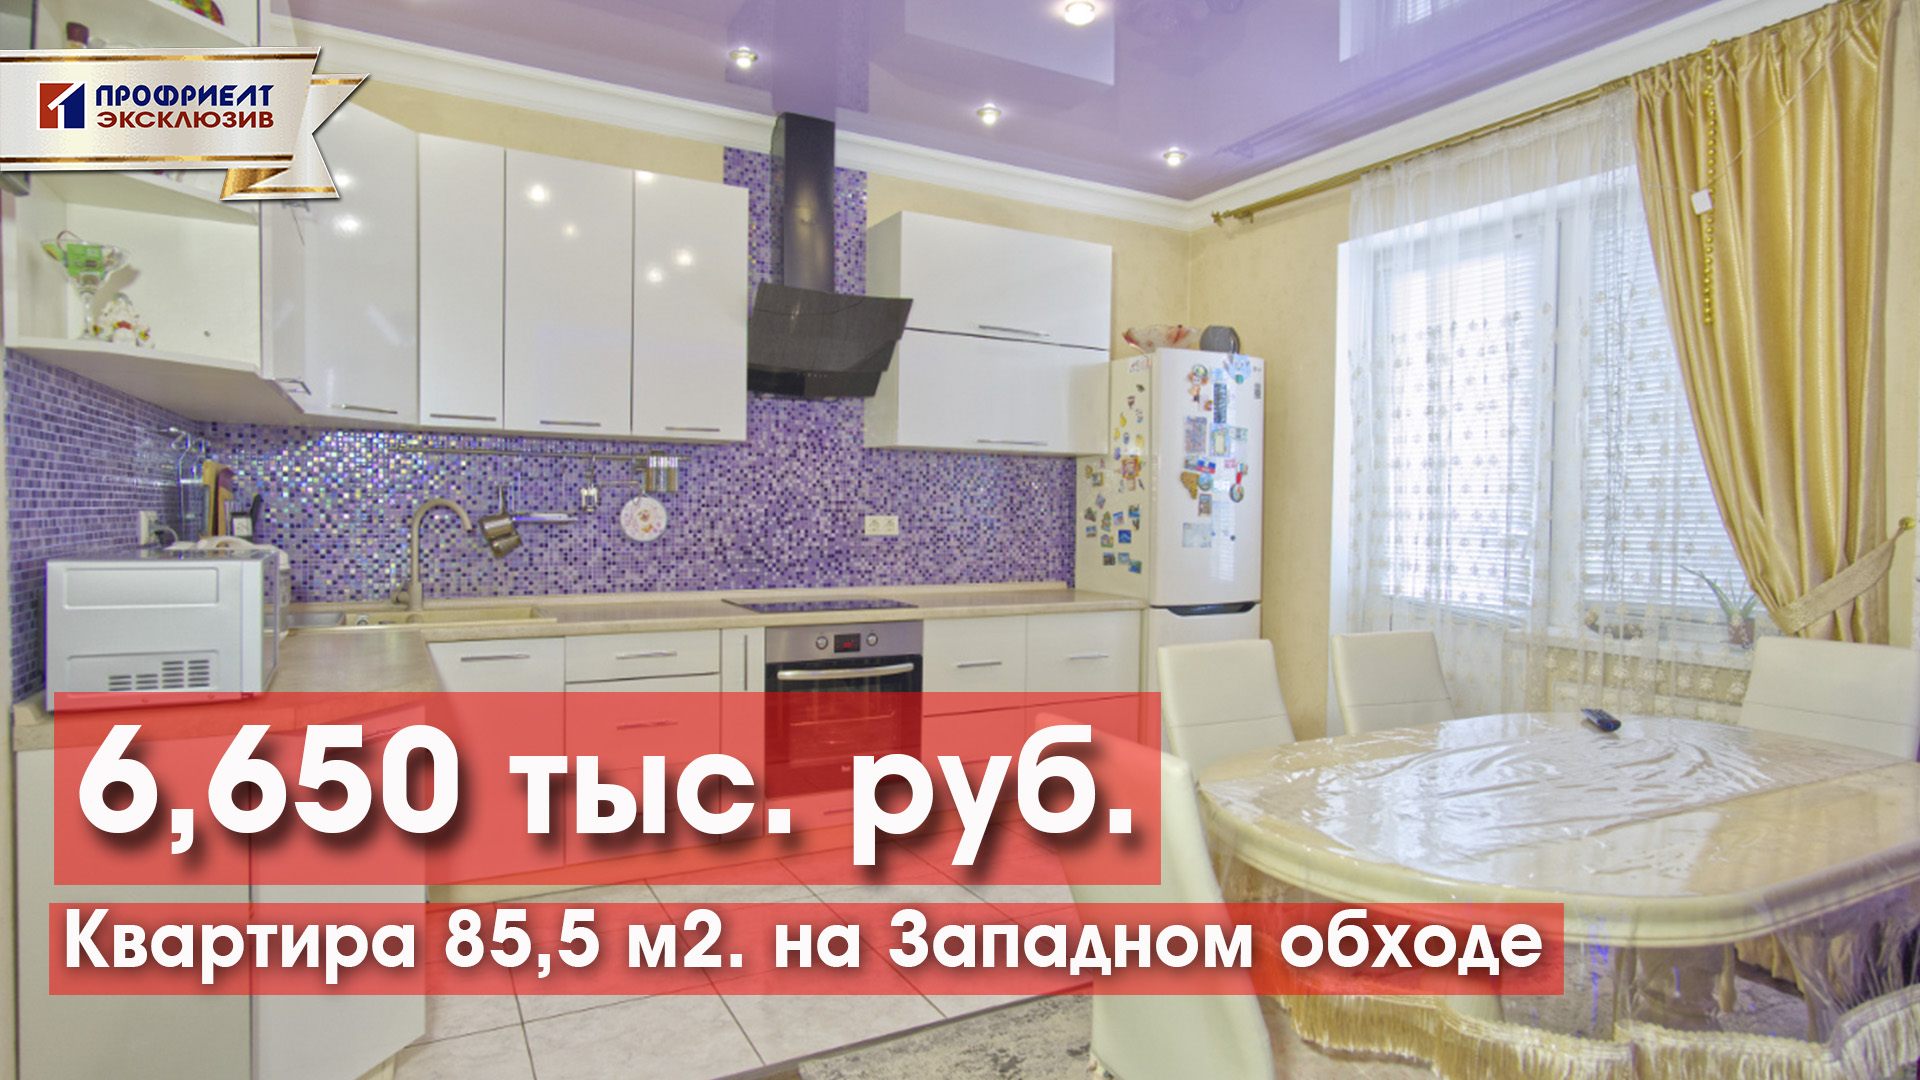 Квартира 85,5 м2. на Западном обходе за 6,650 тыс. руб